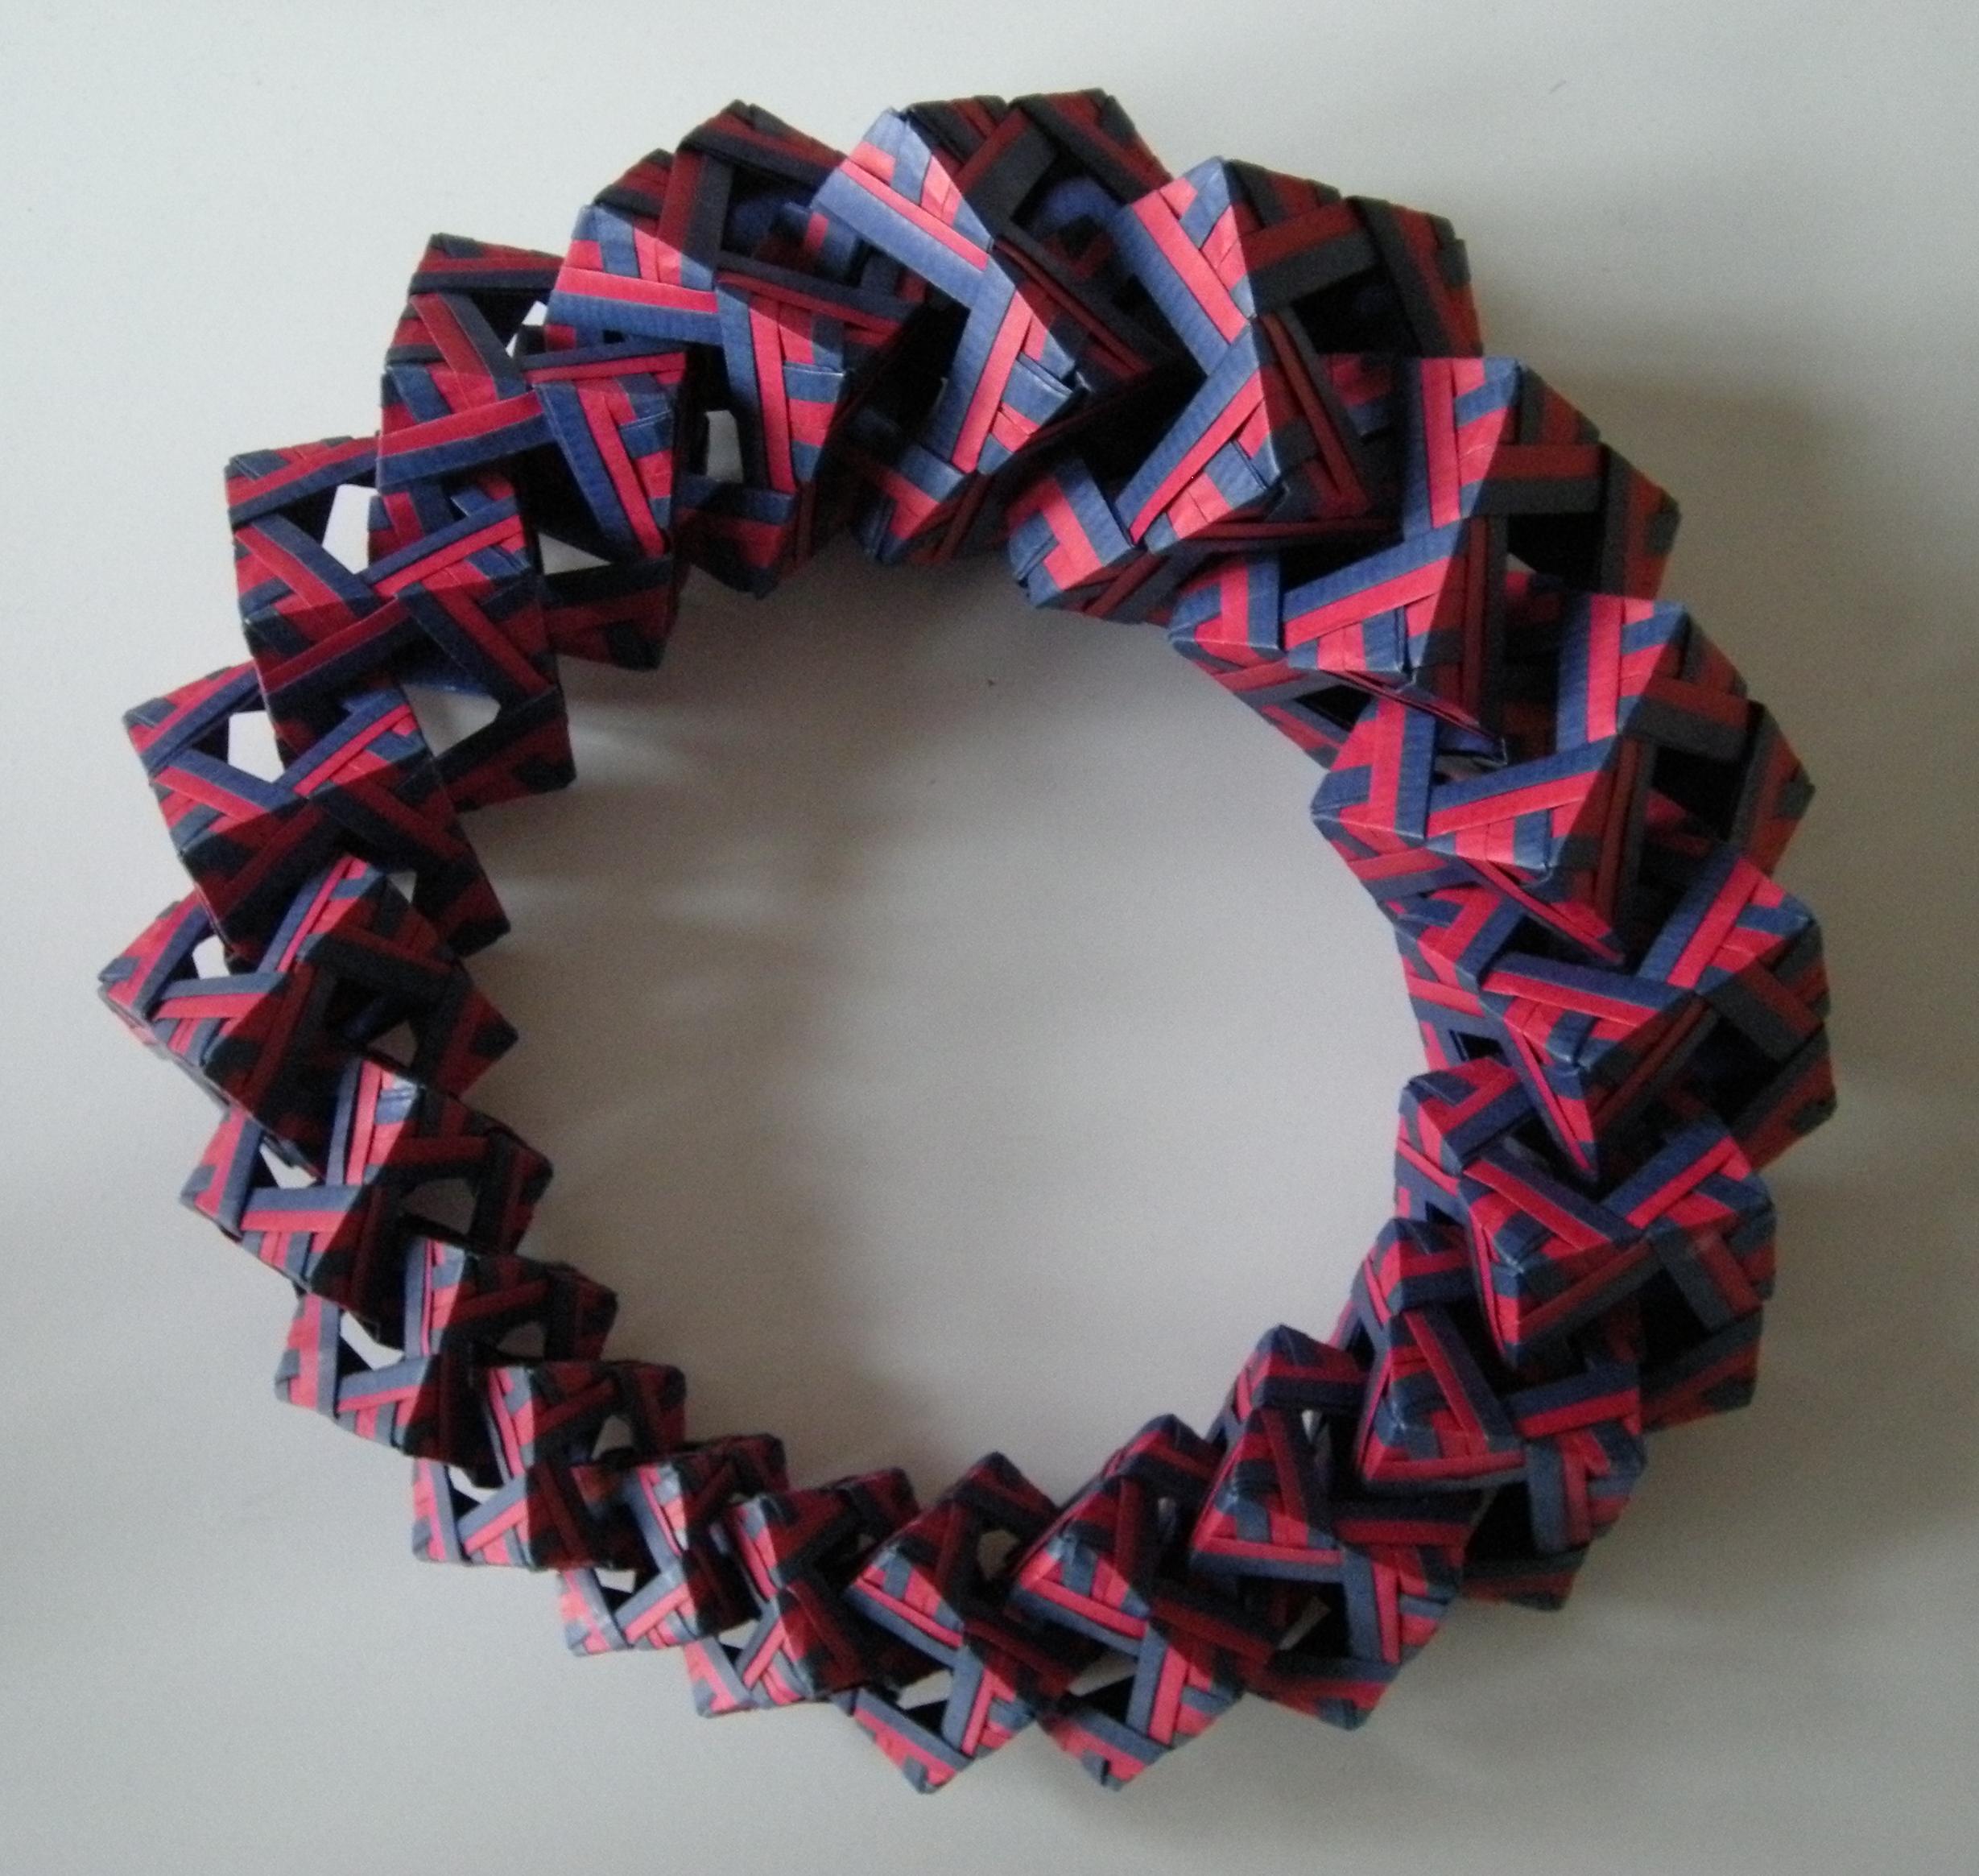 Abb. 3: Ring aus Origami-Würfeln im Design „Decoration Box“ von Lewis Simon.